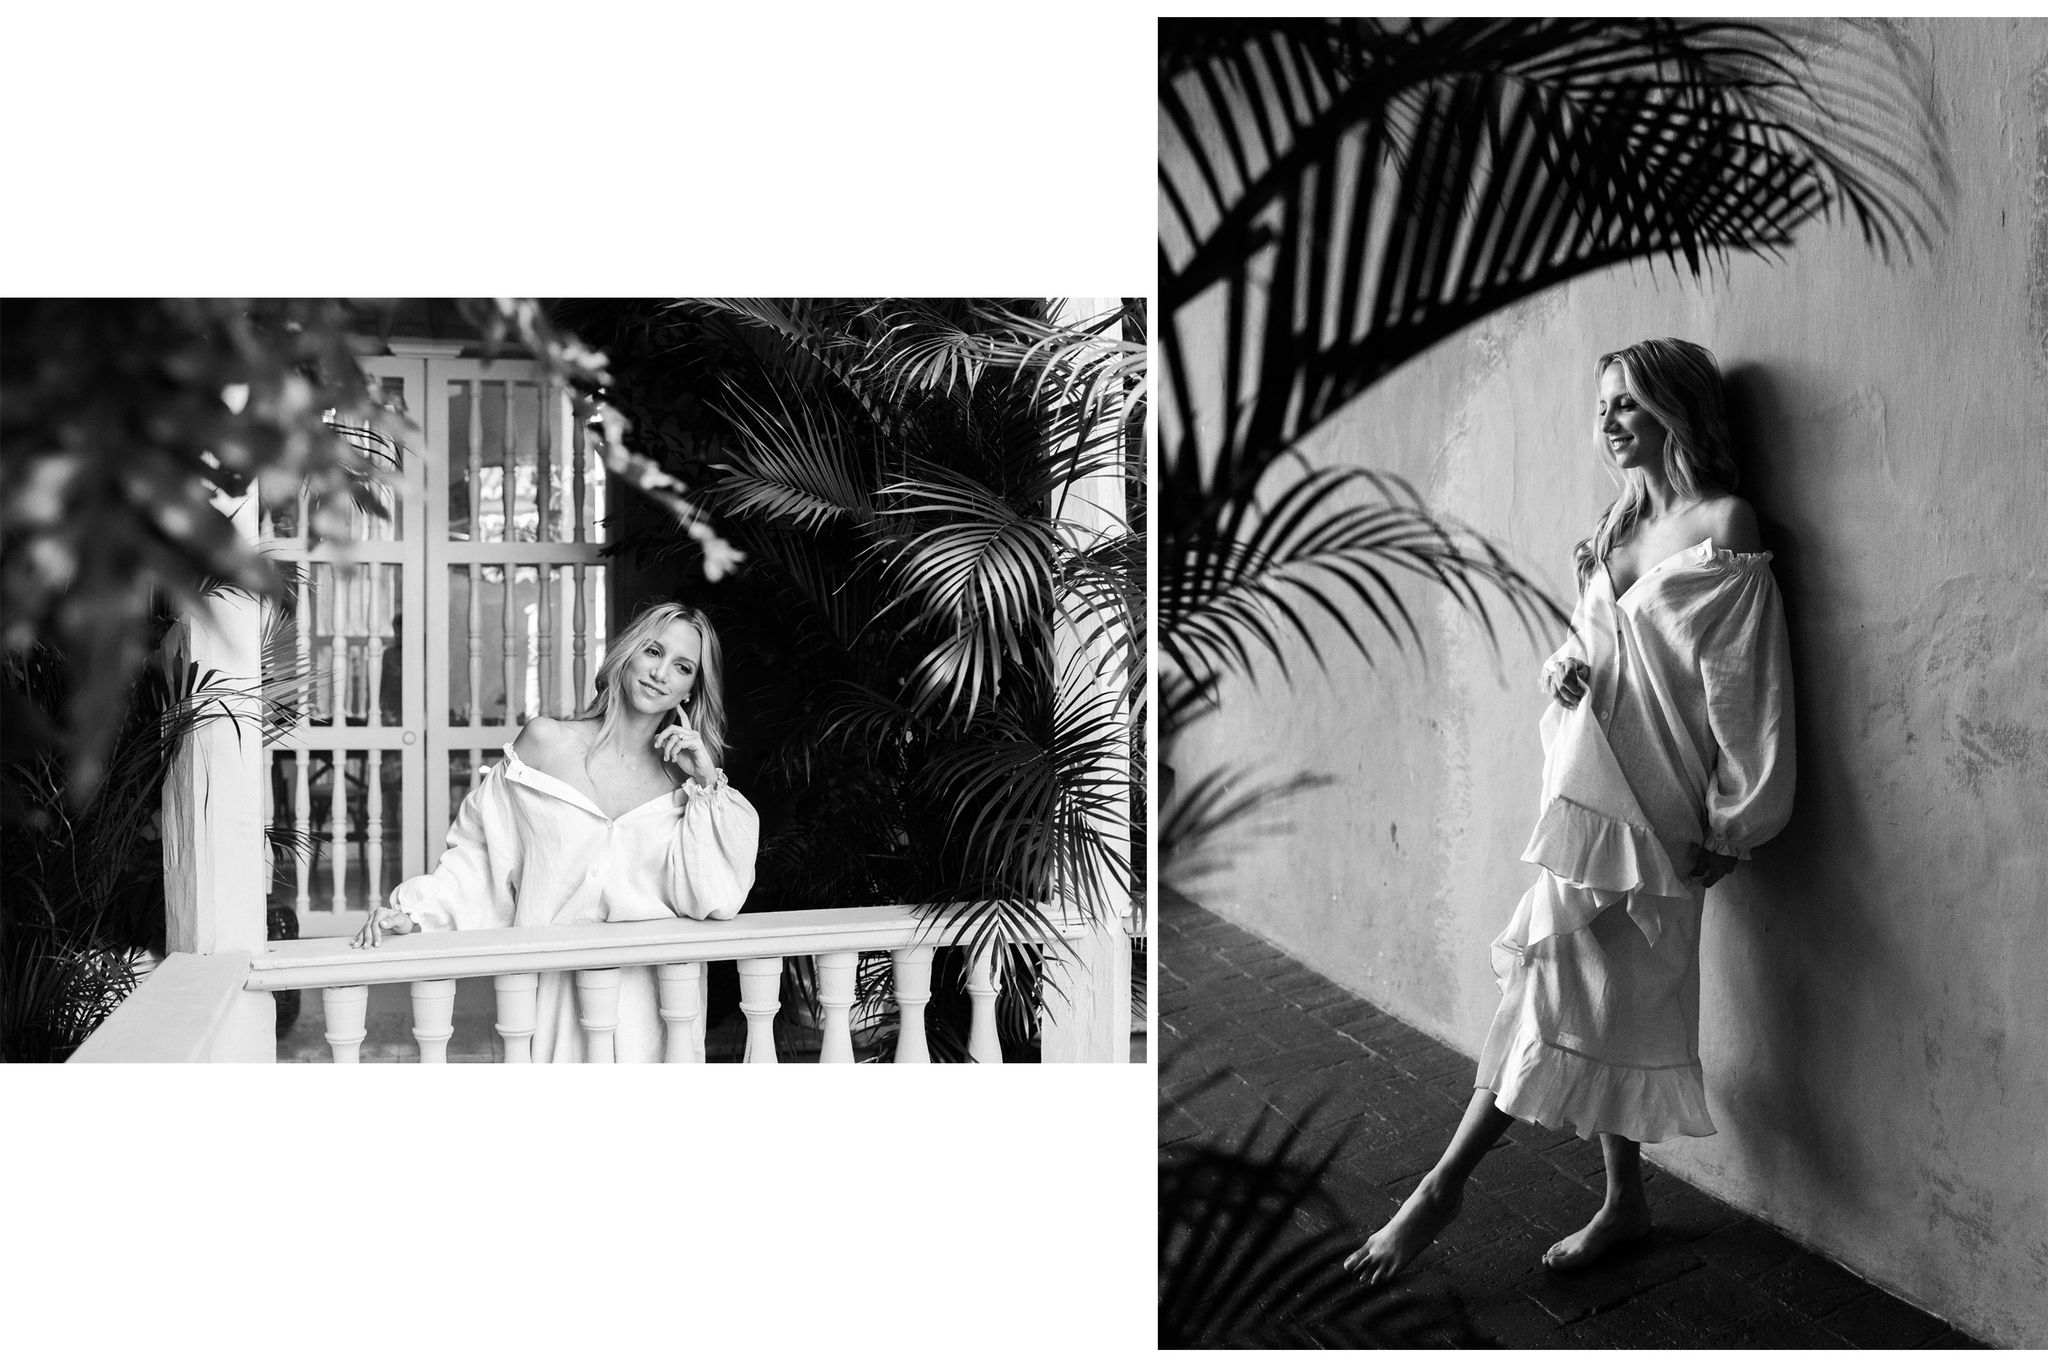 Photograph, White, Black-and-white, Snapshot, Photography, Monochrome photography, Stock photography, Tree, Adaptation, Architecture, 